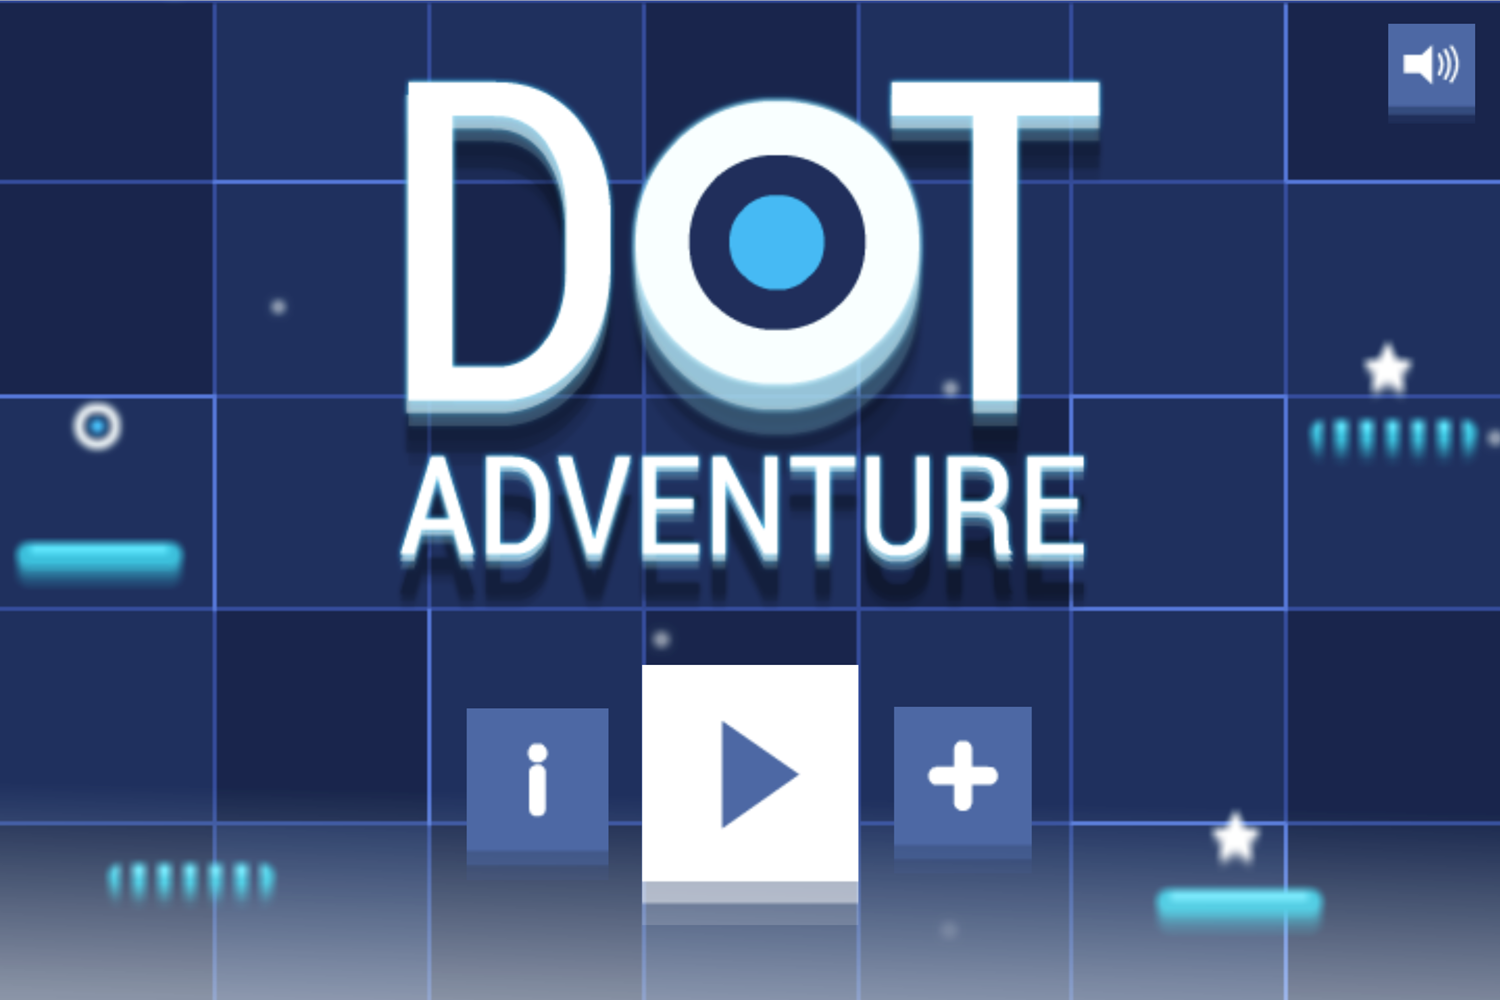 Dot Adventure Game Welcome Screen Screenshot.